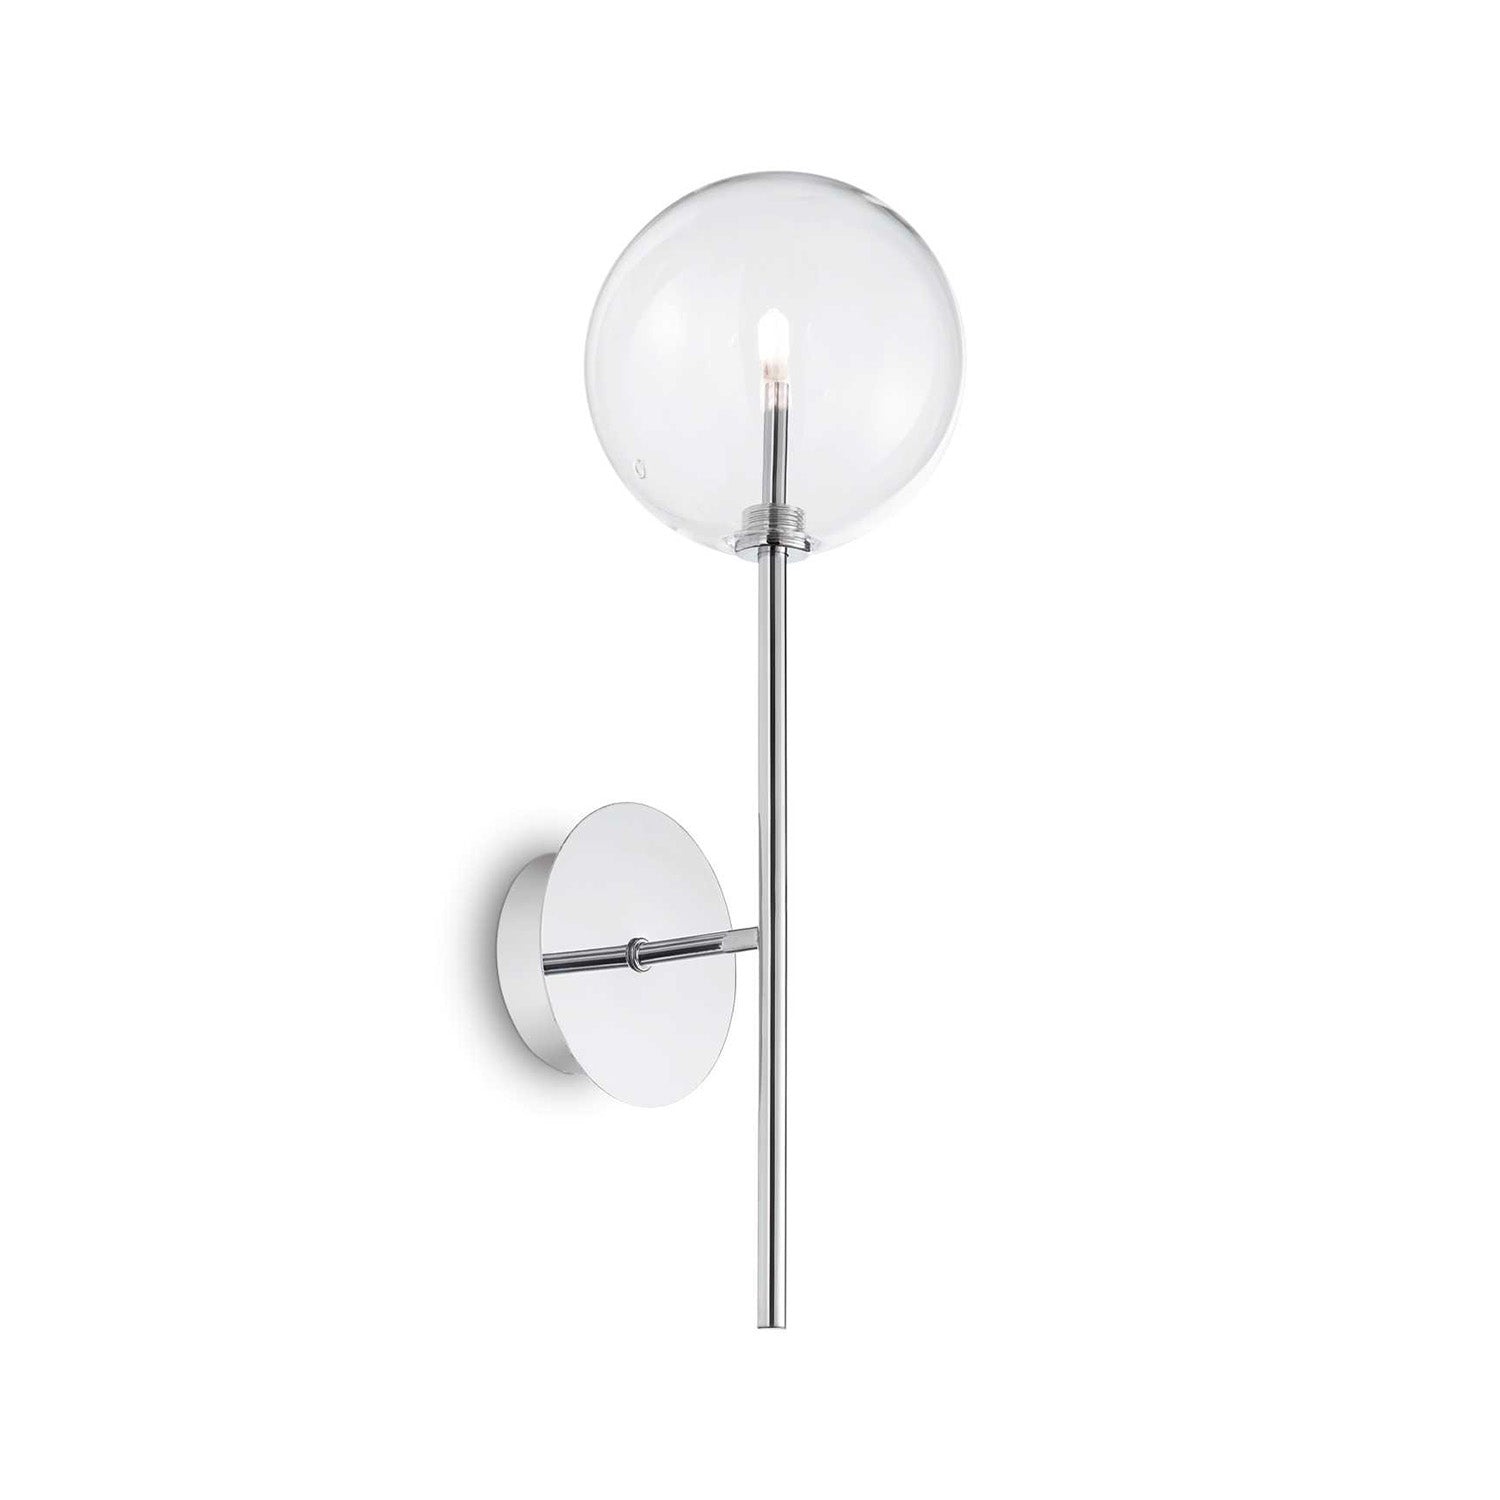 EQUINOXE - Stem wall light with glass ball